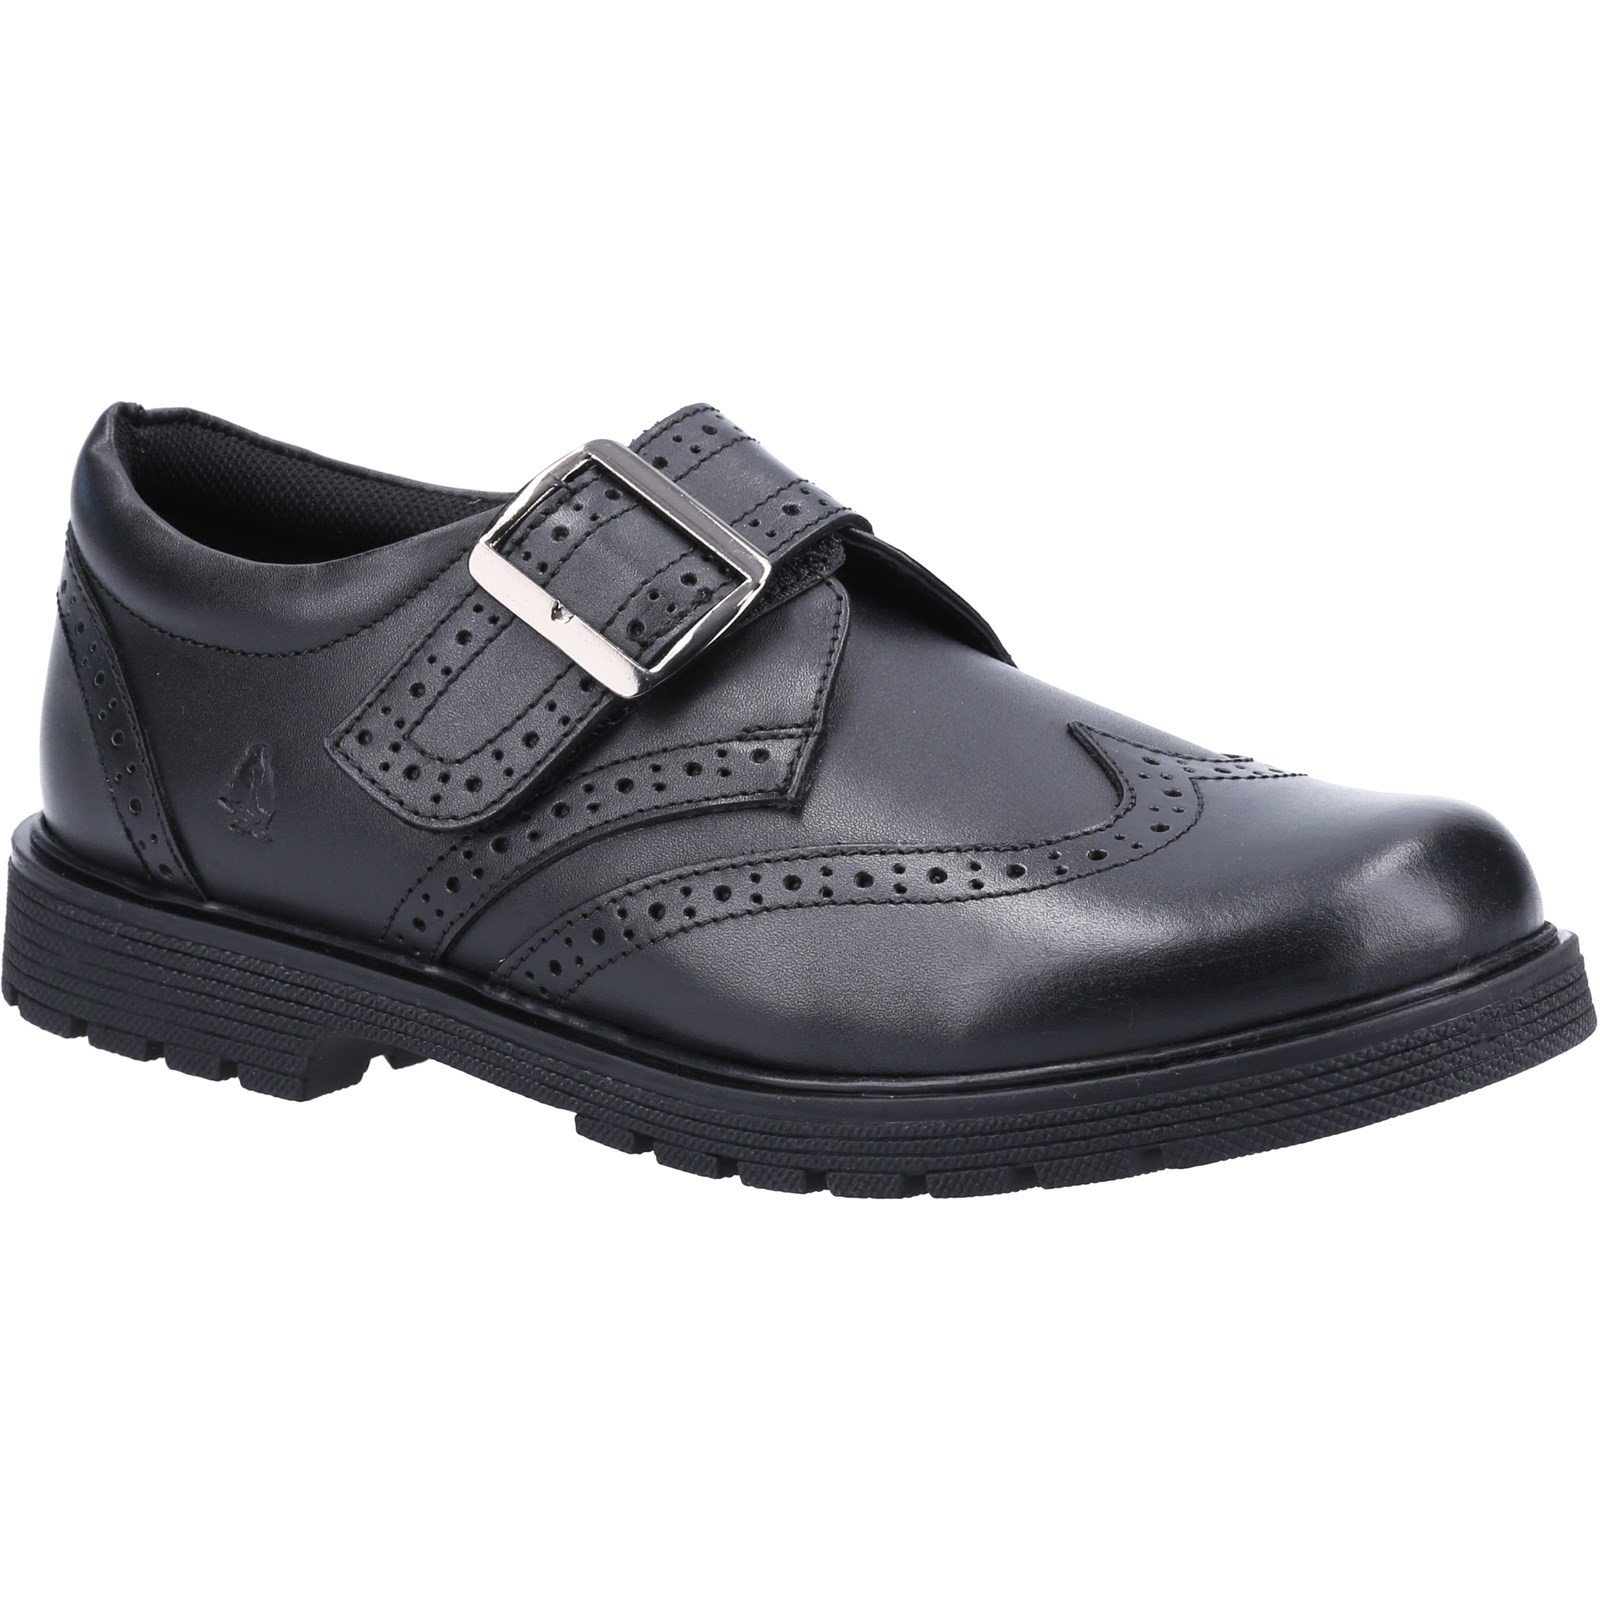 Hush Puppies Kid's Rhiannon Junior School Shoe Black 32625 - Black 12